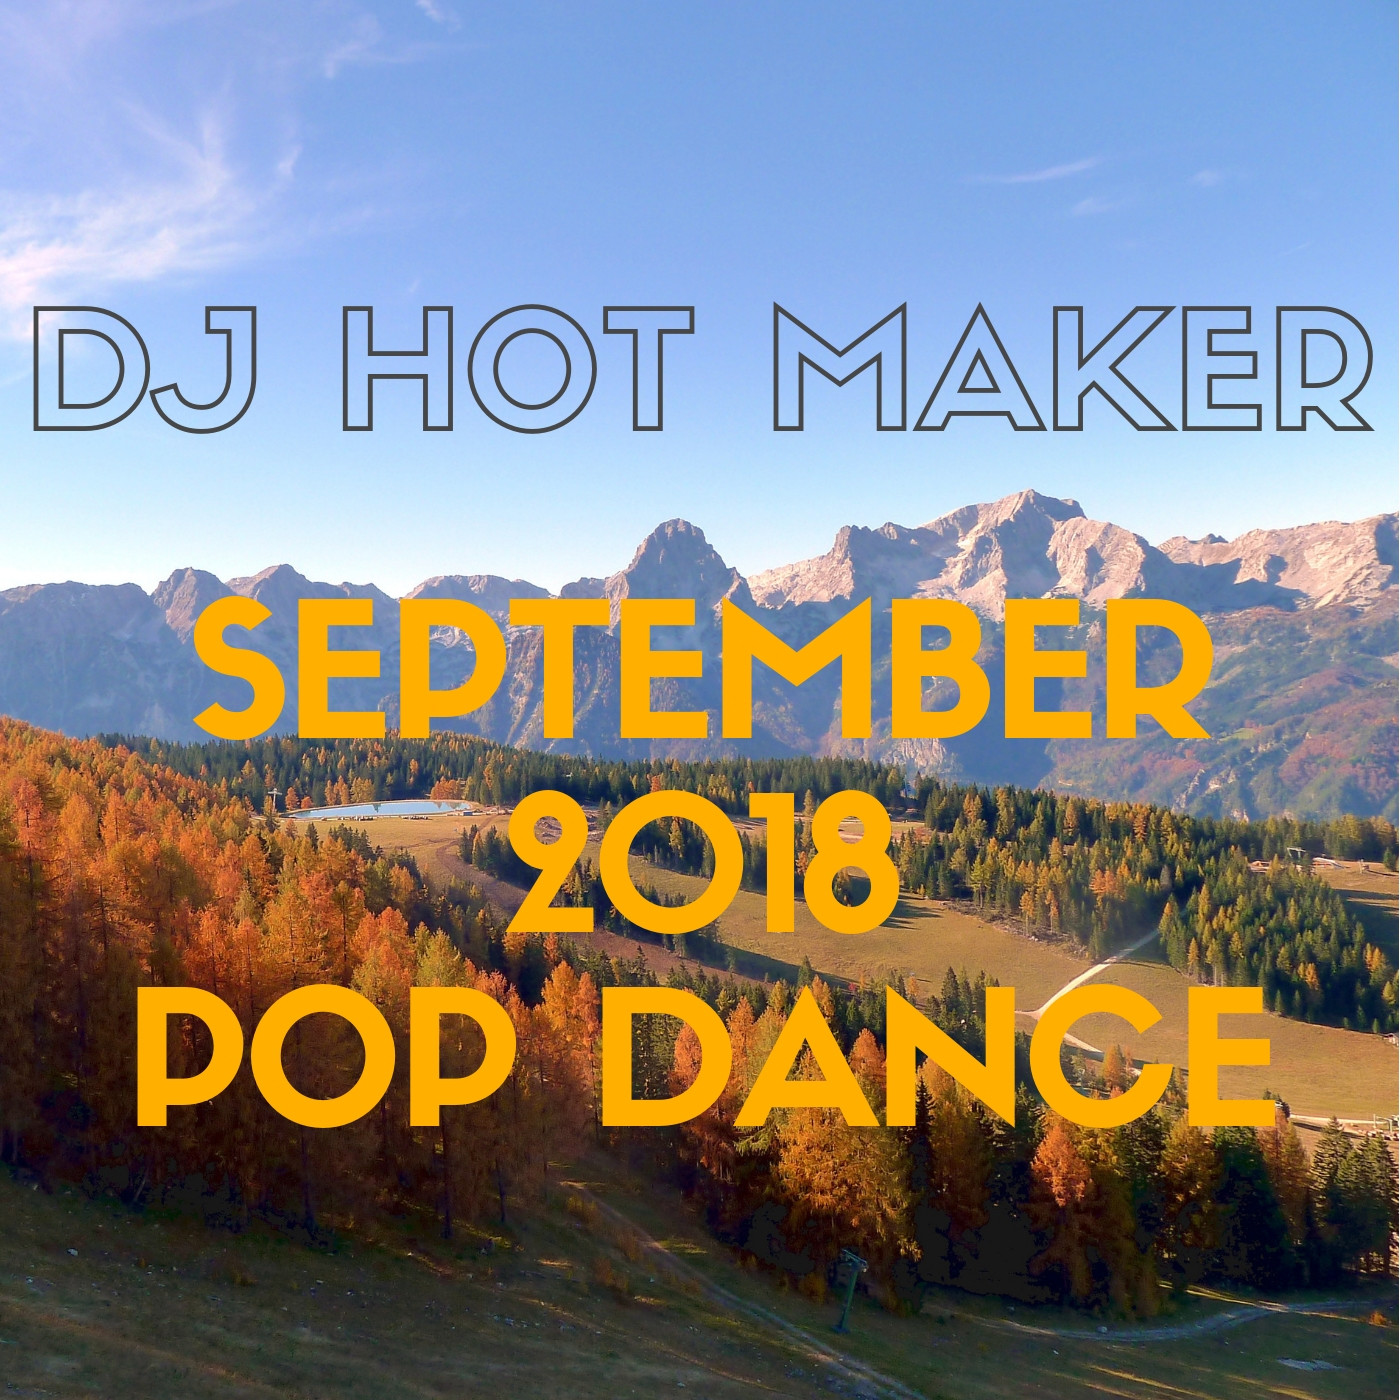 DJ Hot Maker - September 2018 Pop Dance Promo